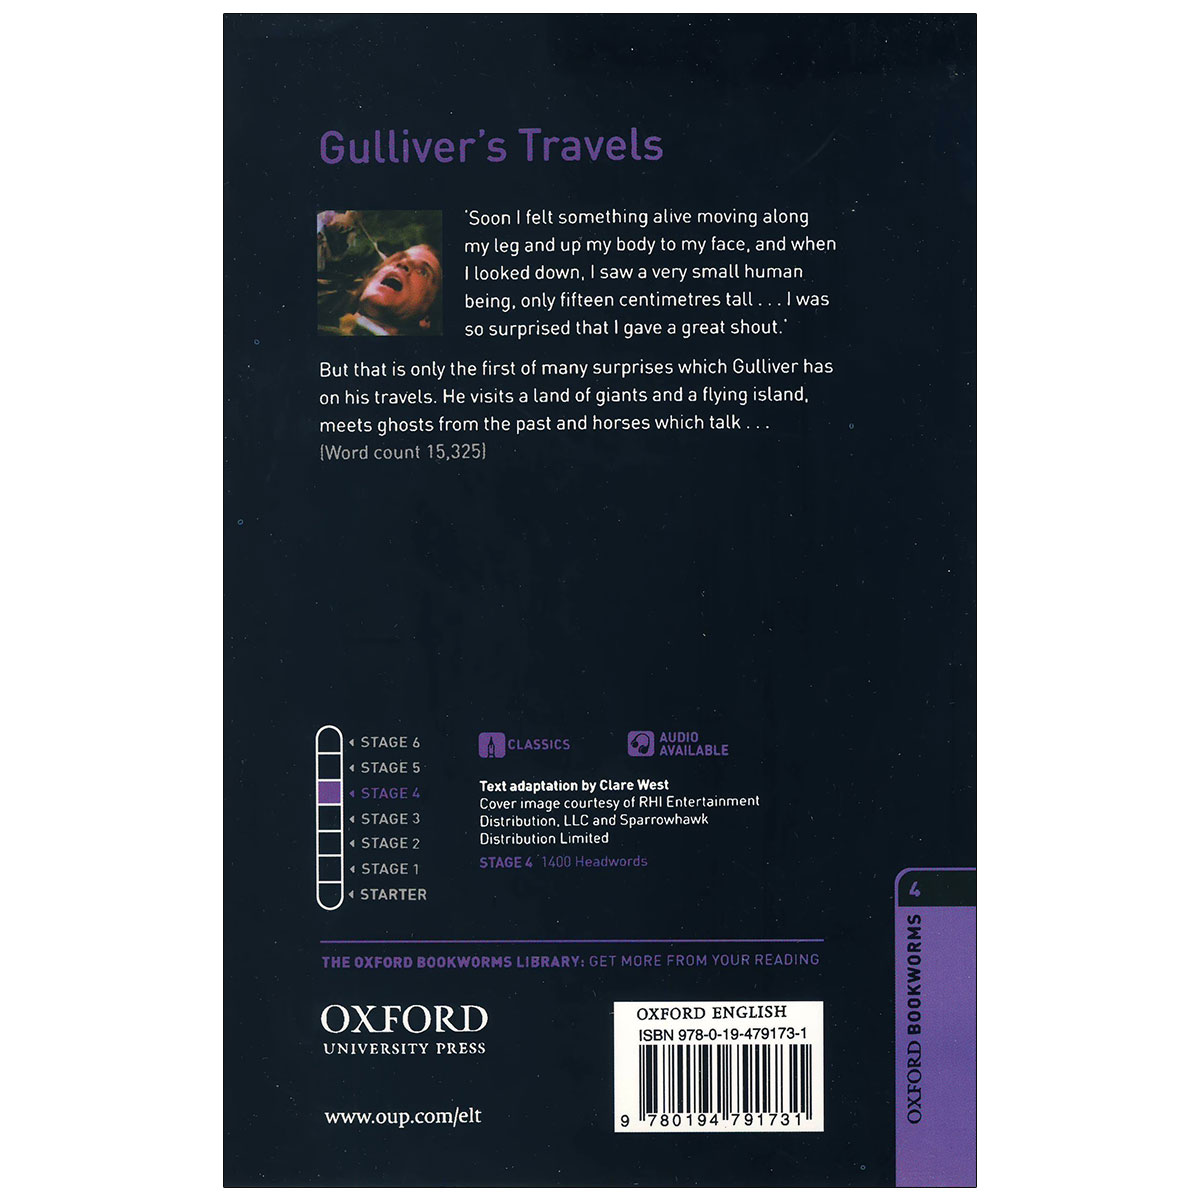 Gulliver's-Travels-back